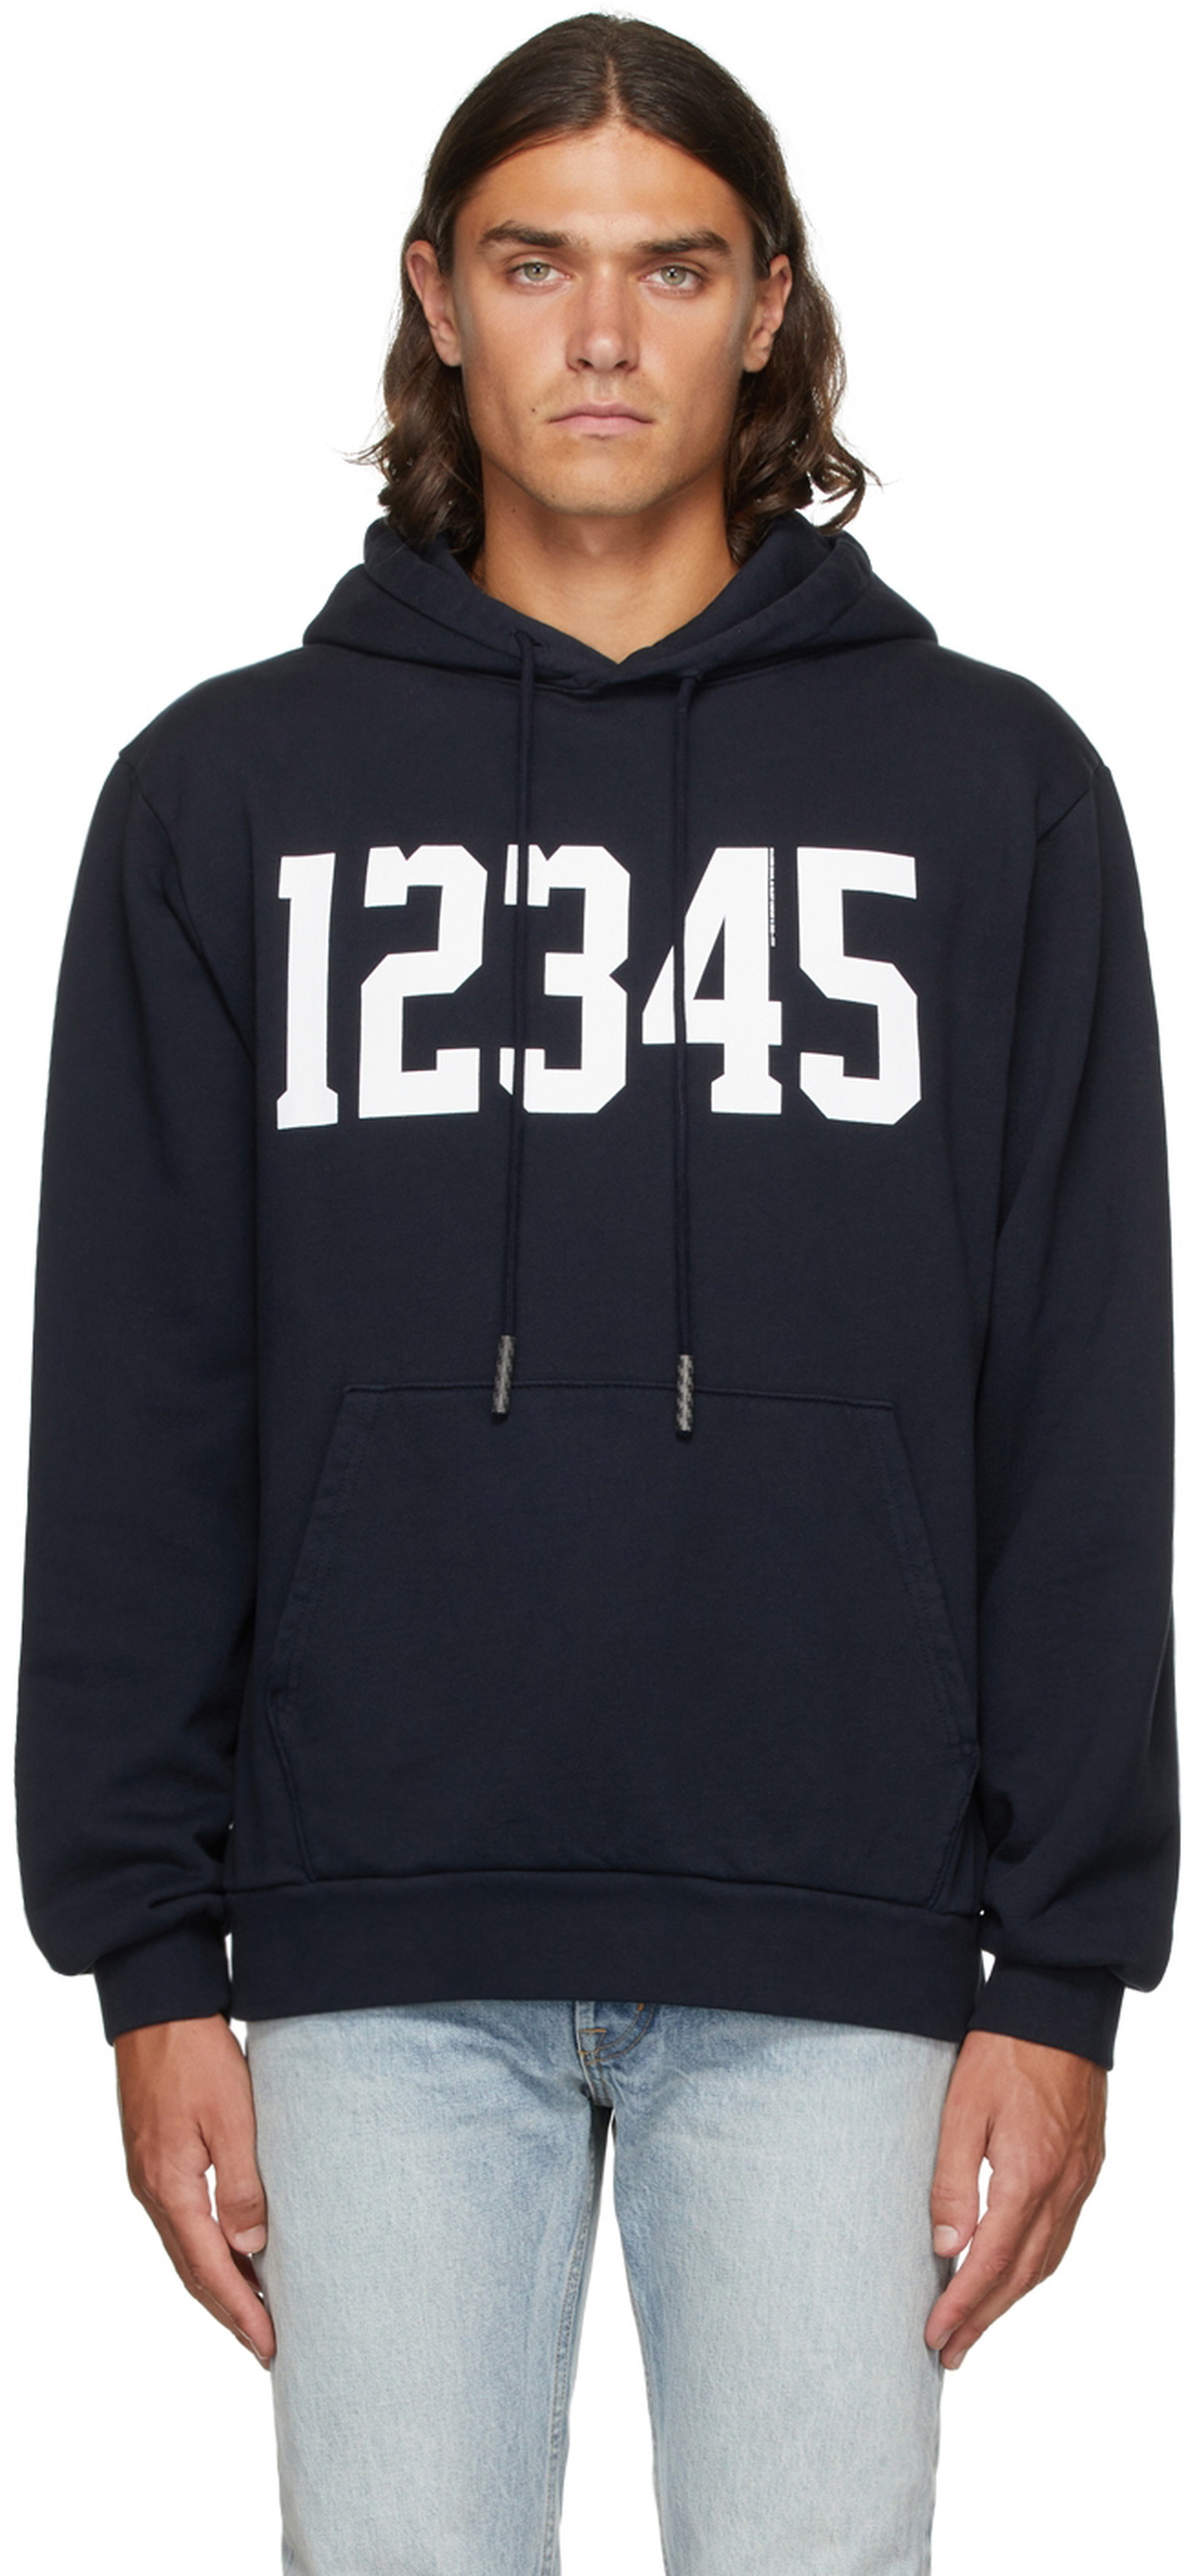 Benjamin Edger 12345 Hooded Sweatshirt 新商品 - スウェット・トレーナー